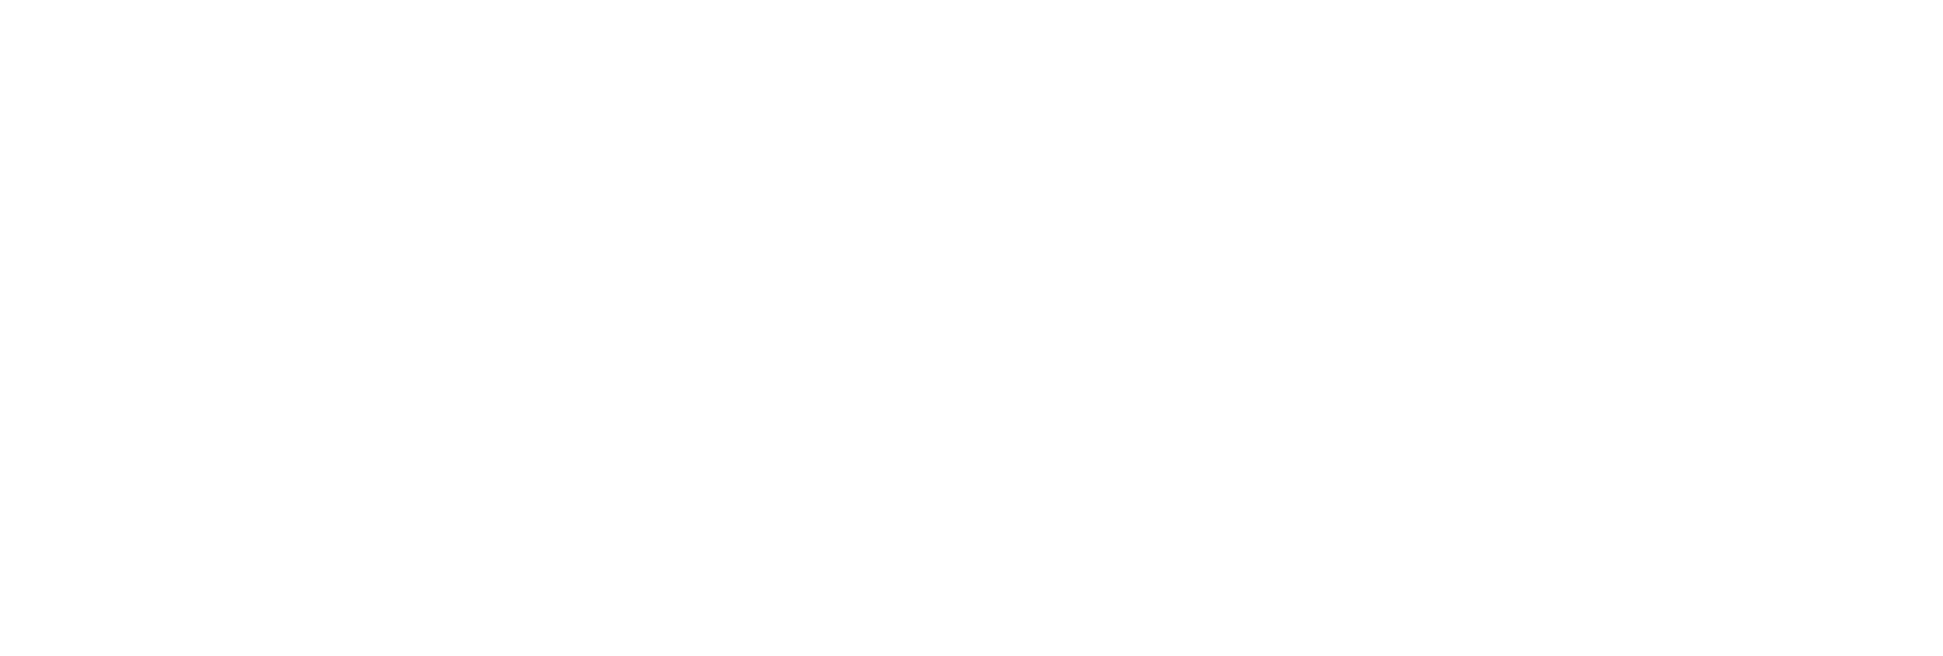 AniCura Dyreklinikk Grimstad logo